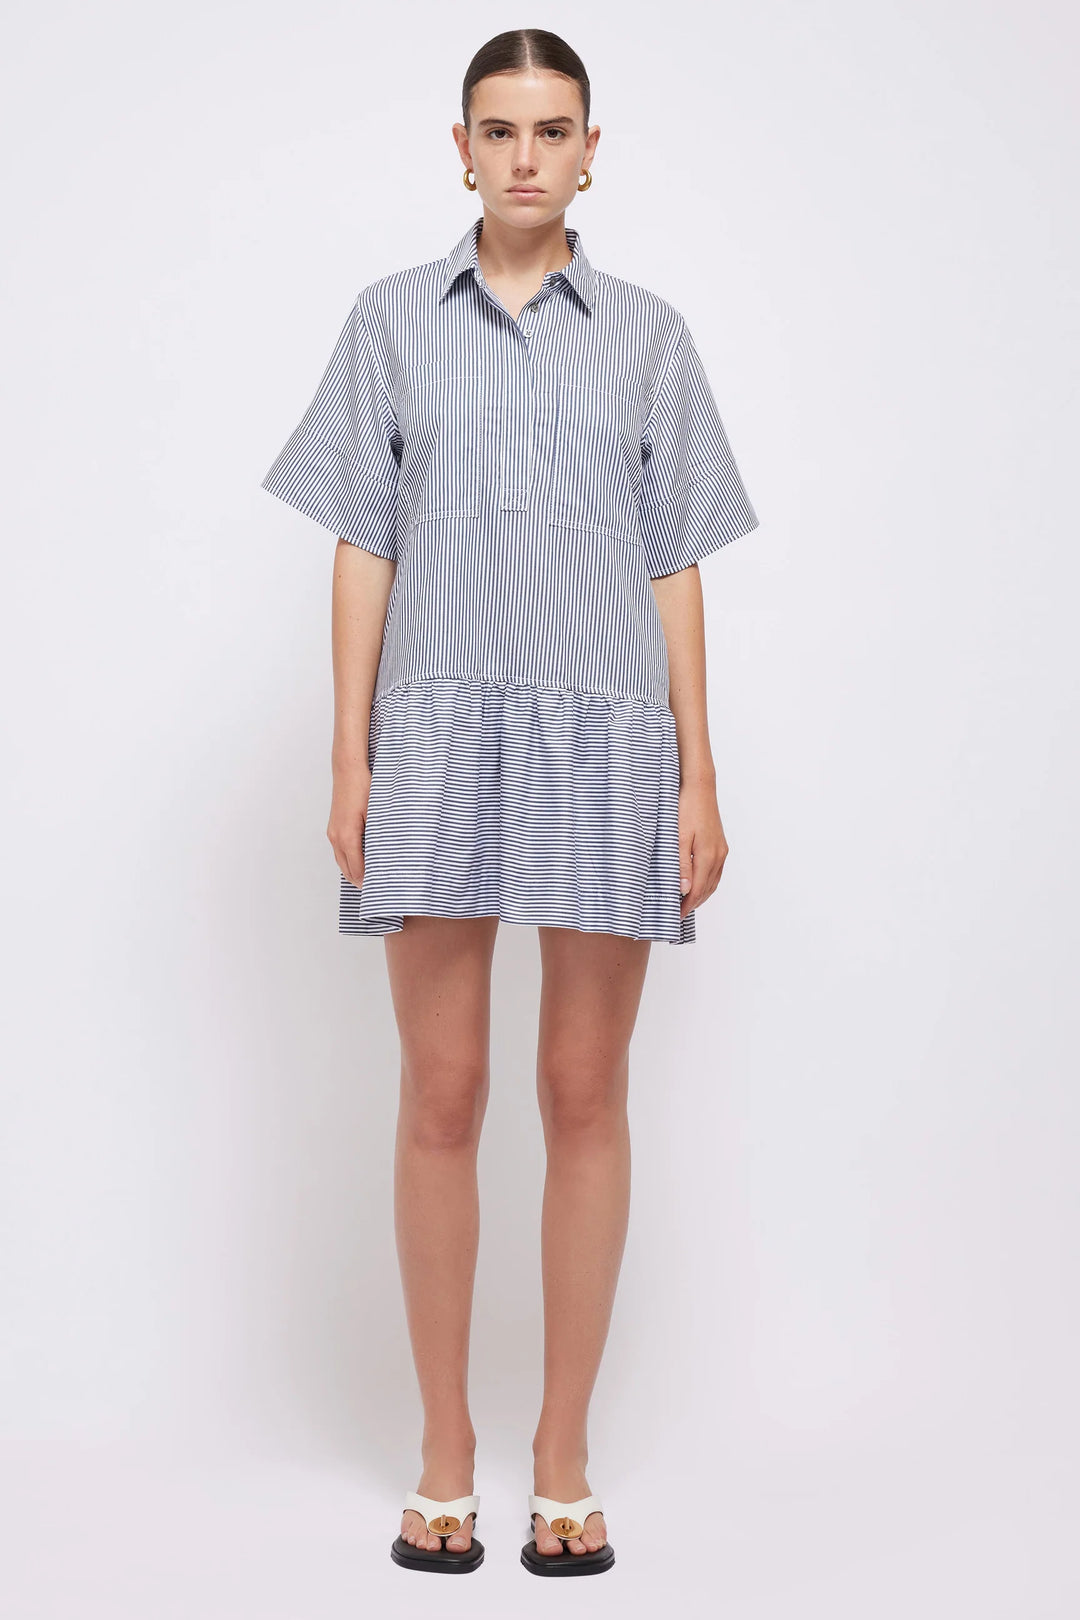 SIMKHAI - Cris Shirt Dress in Midnight Stripe